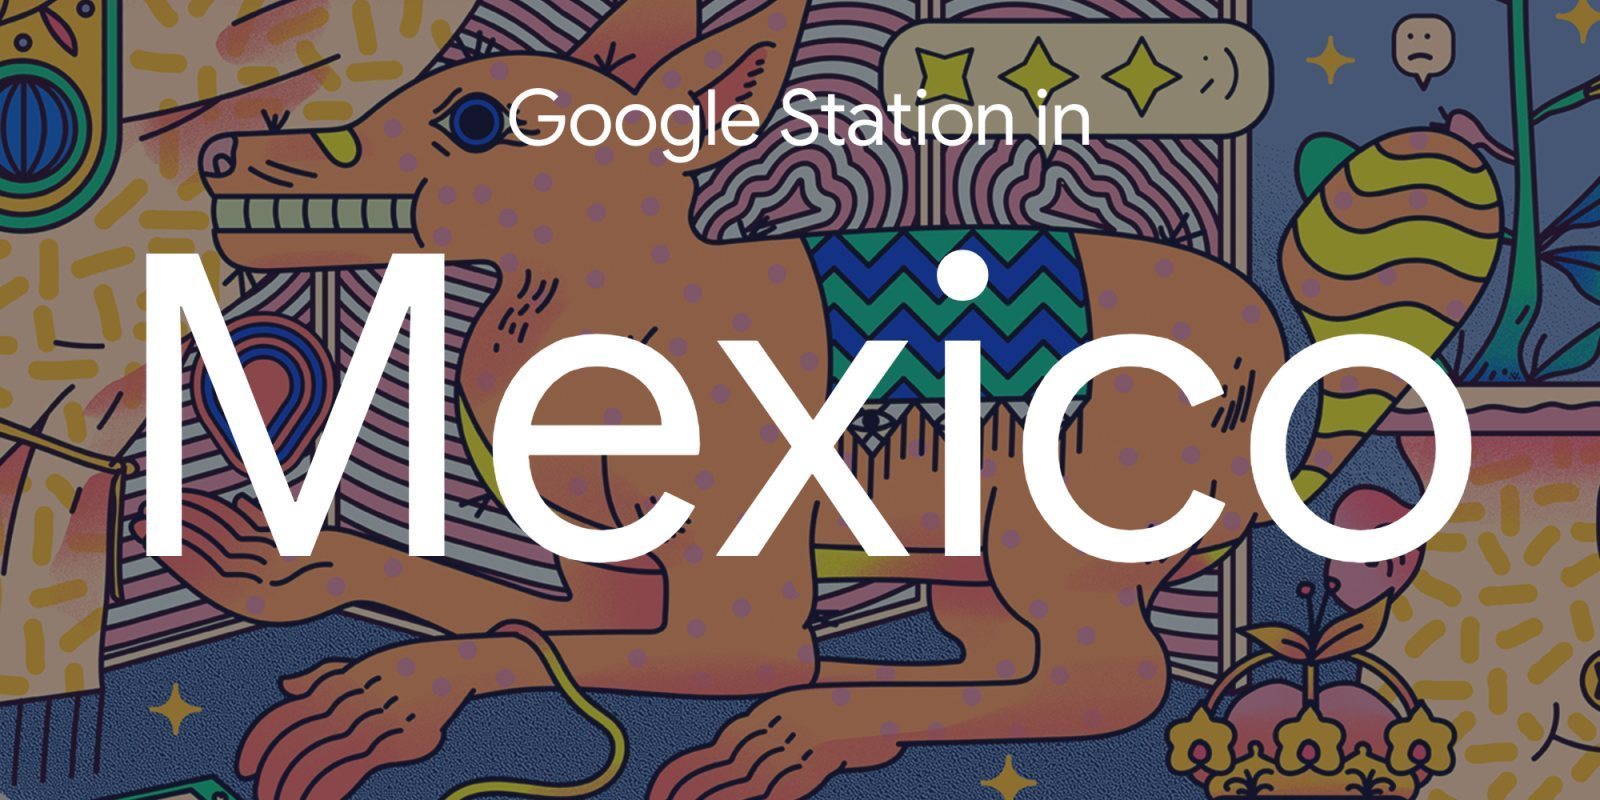 Google Station: WiFi gratis para México gracias a Google